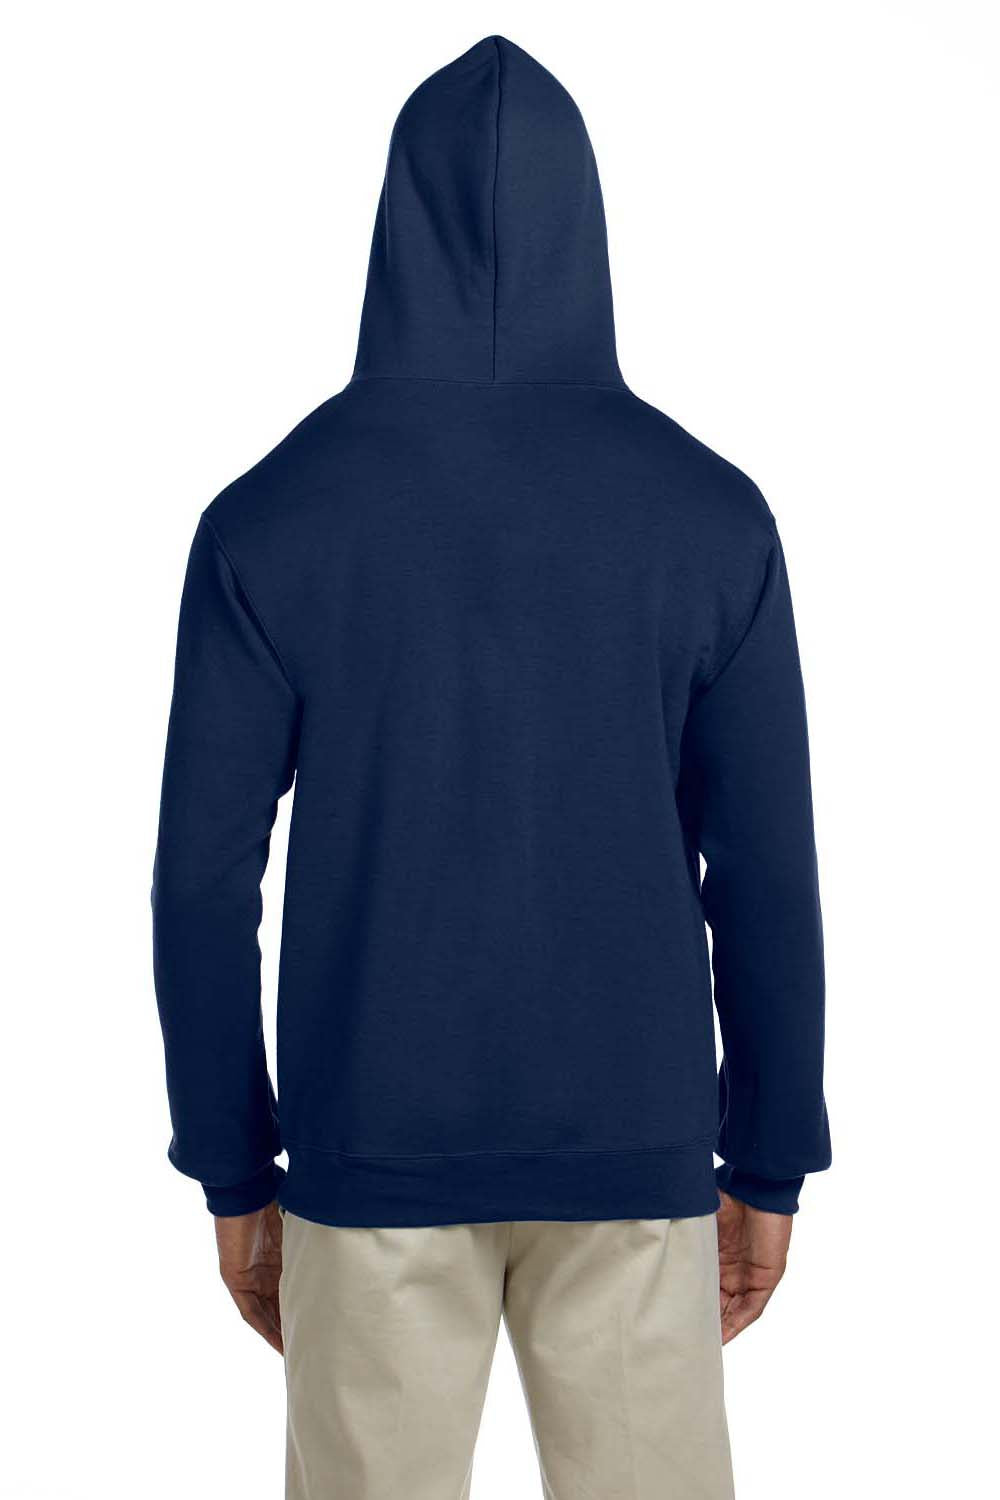 Jerzees 4999 Mens Super Sweats NuBlend Fleece Full Zip Hooded Sweatshirt Hoodie Navy Blue Back